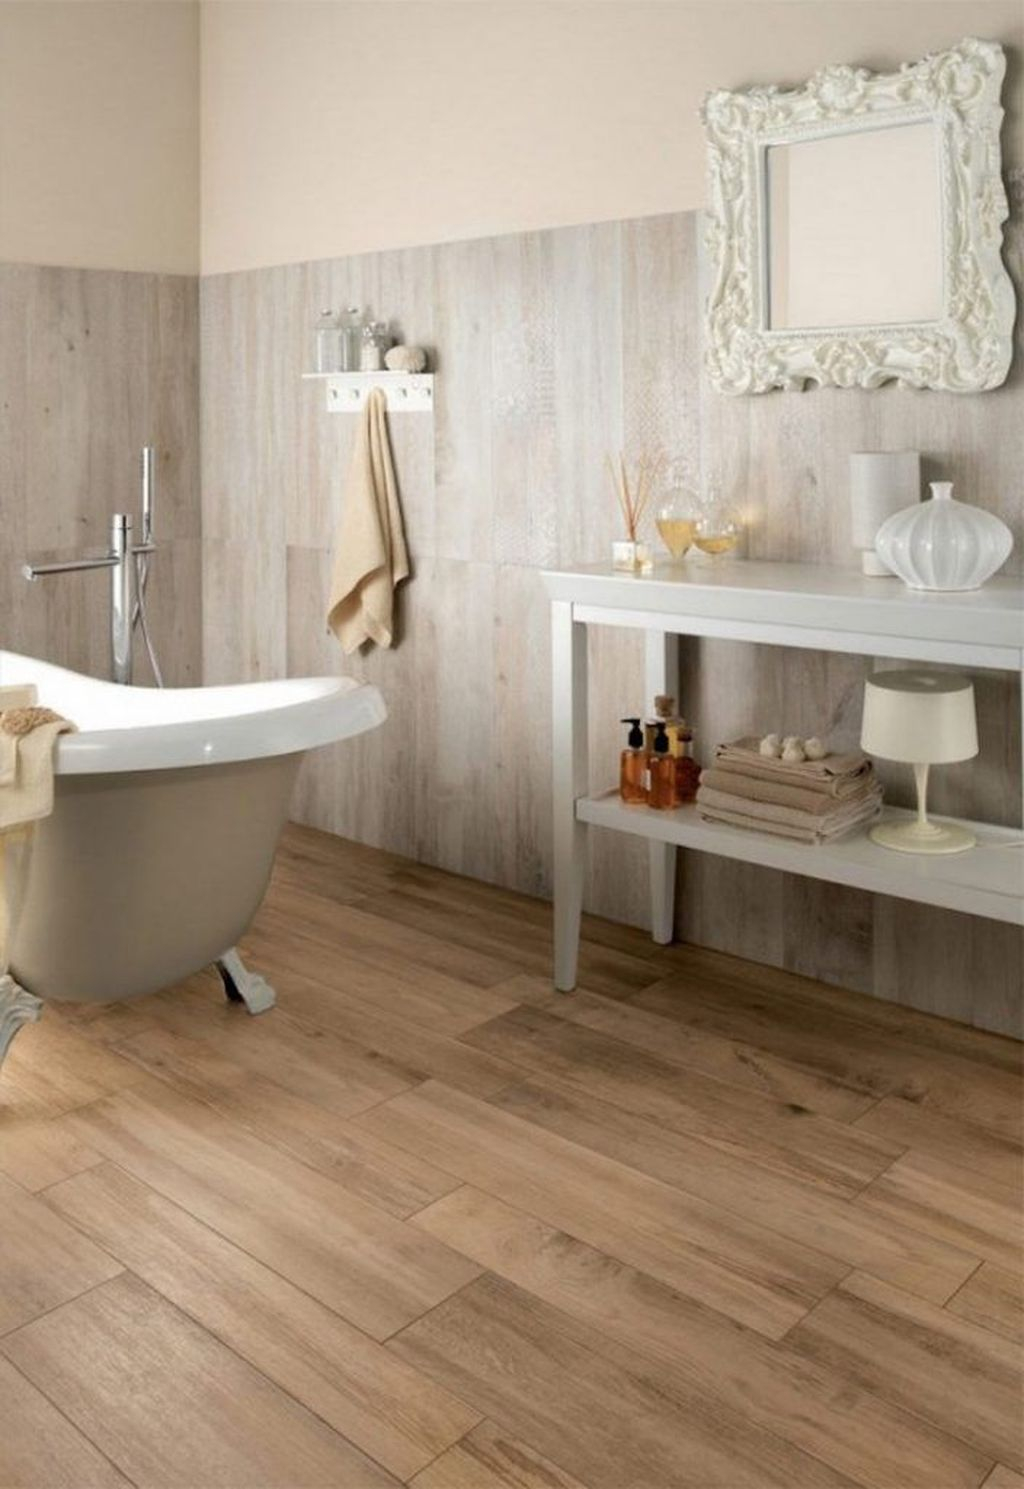 Marvelous Wooden Shower Floor Tiles Designs Ideas For Bathroom Remodel 32